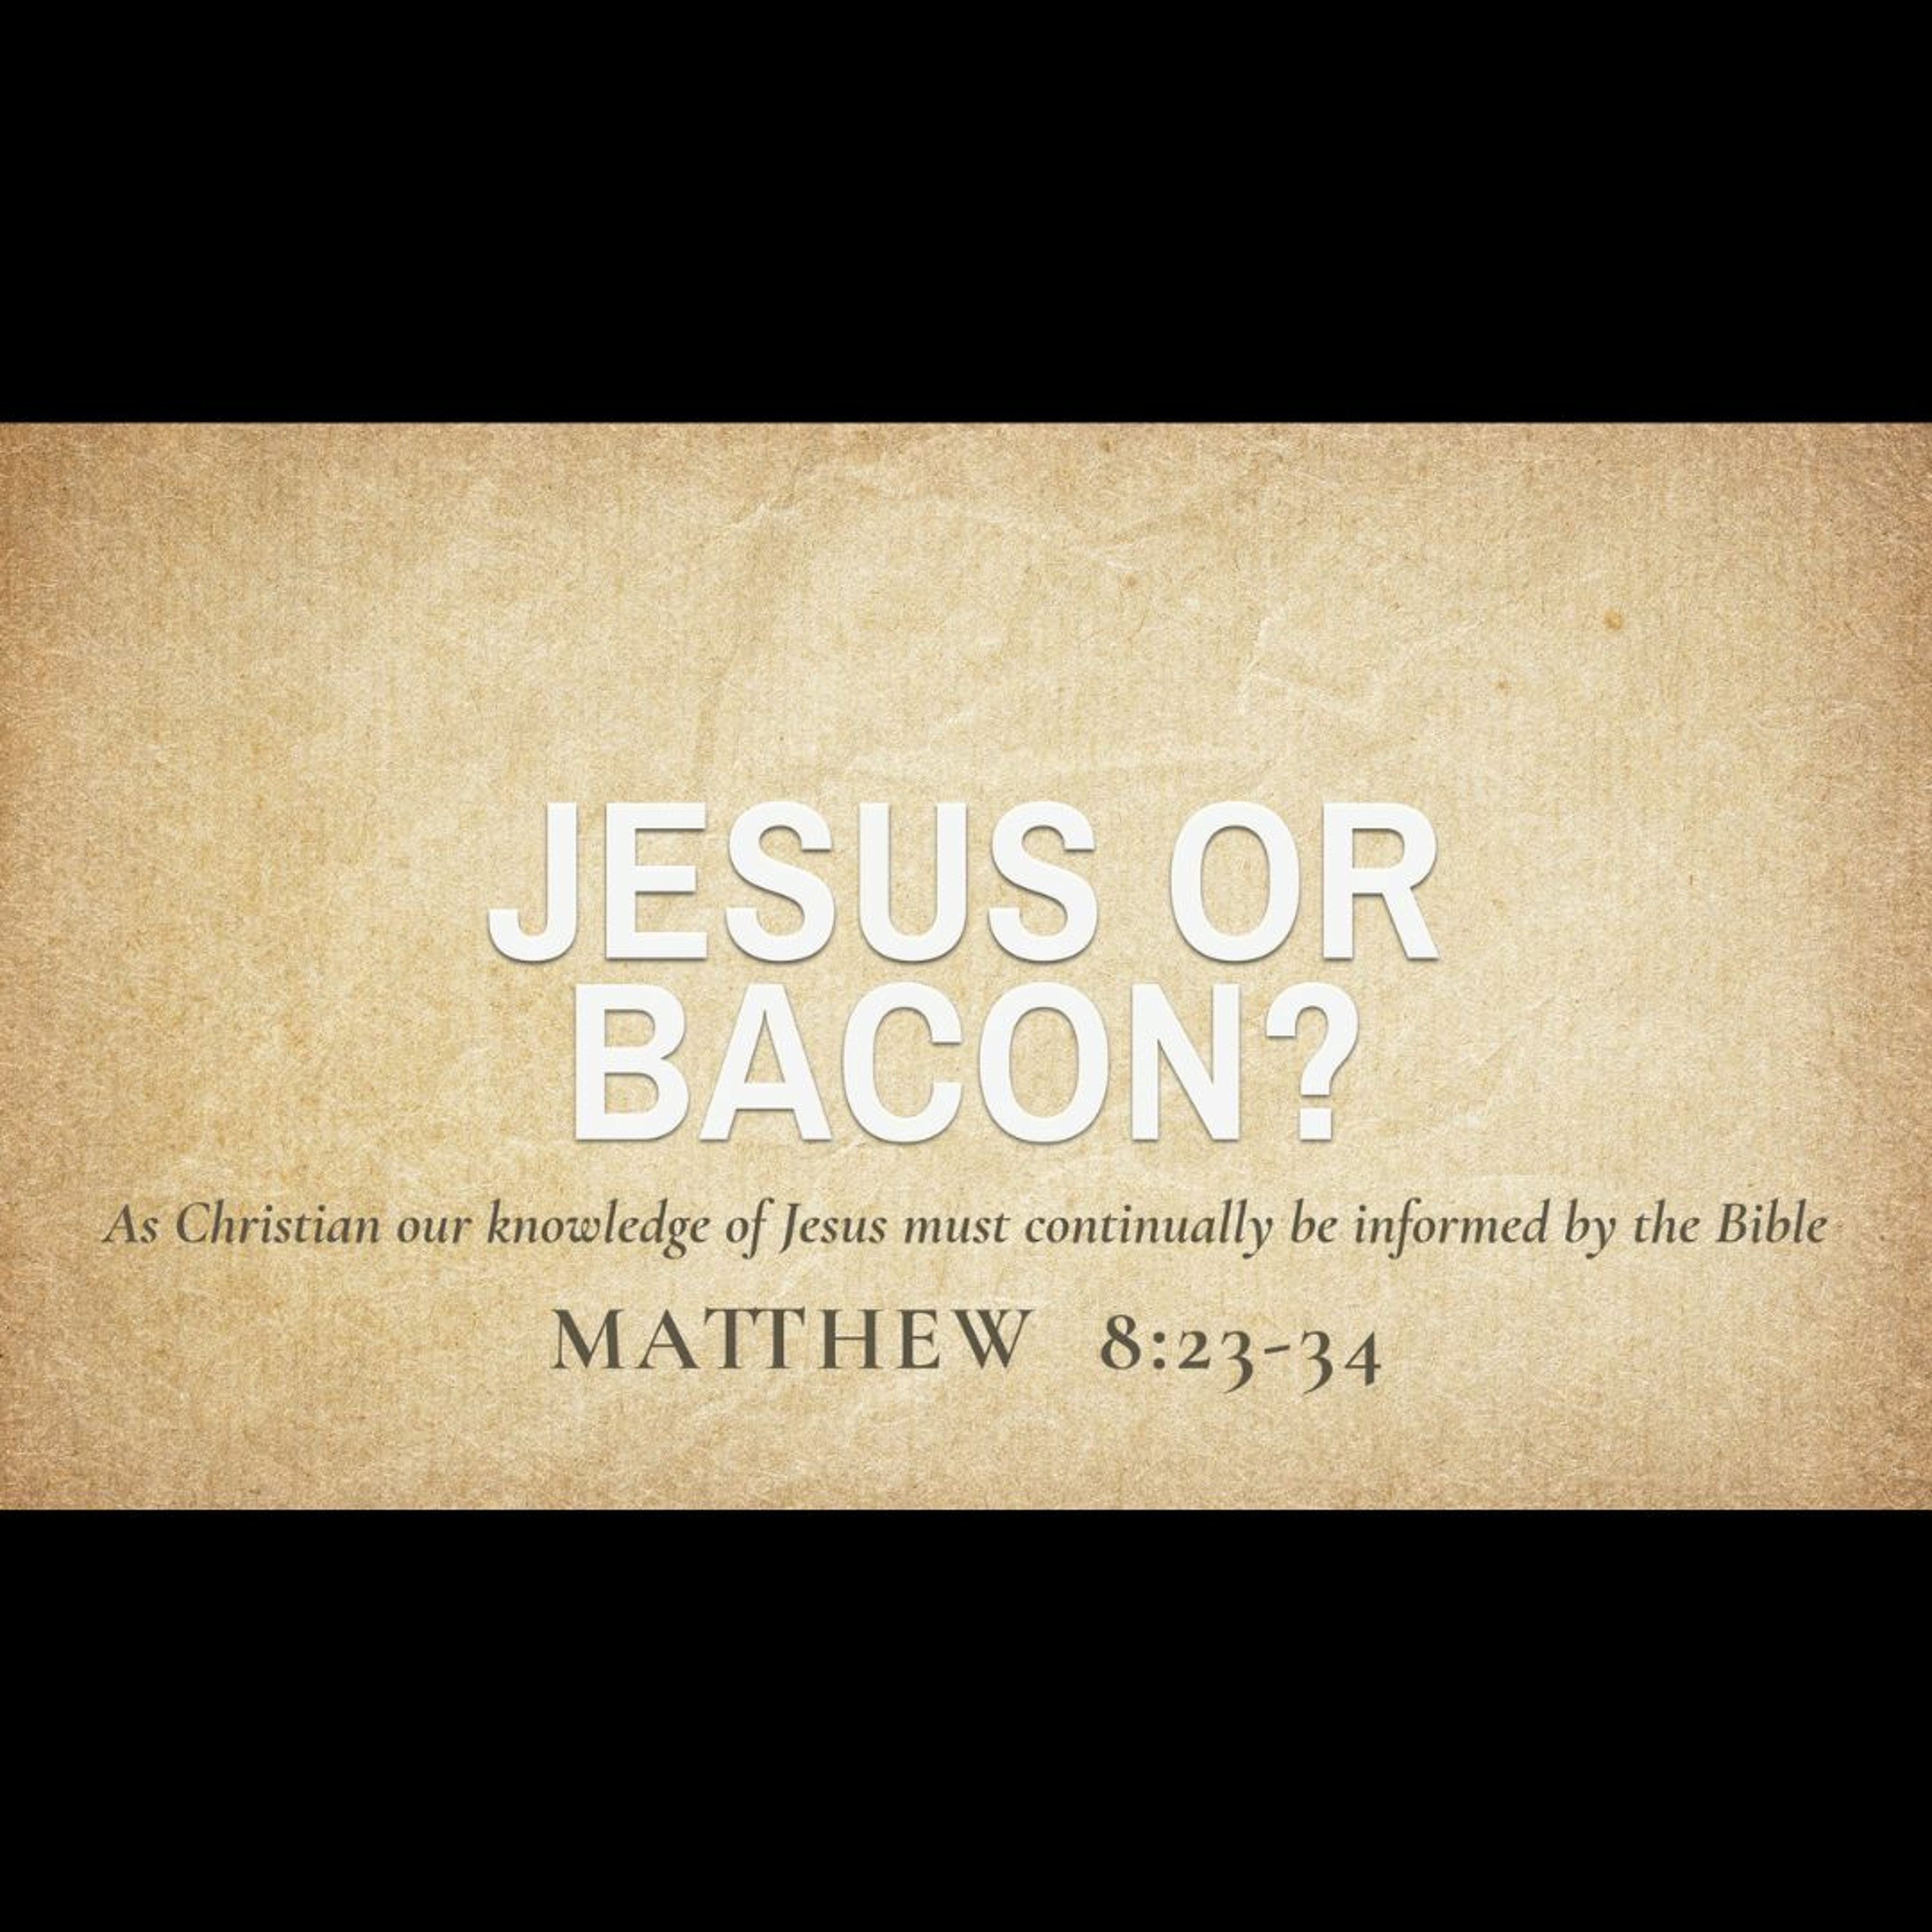 Jesus or Bacon? (Matthew 8:23-34)